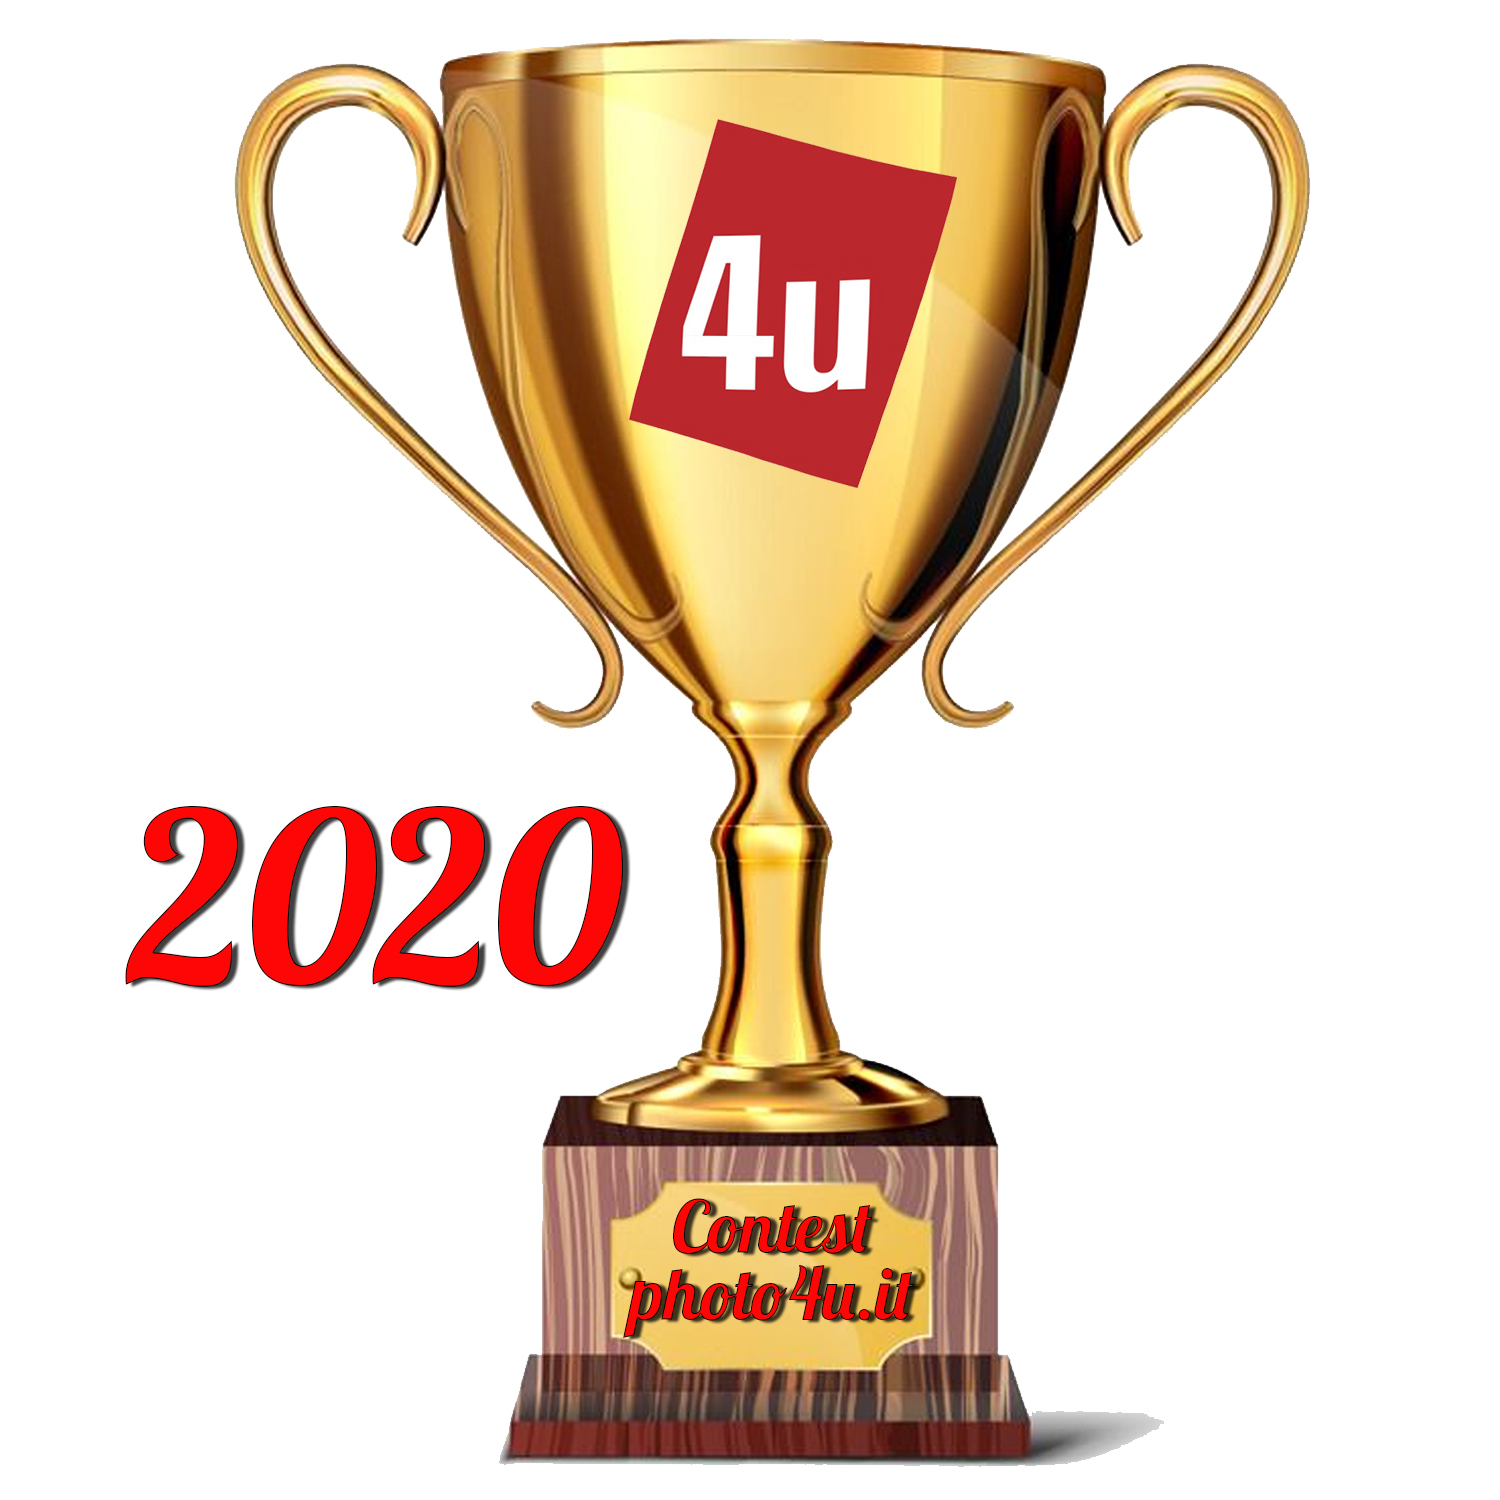 Premio 2020